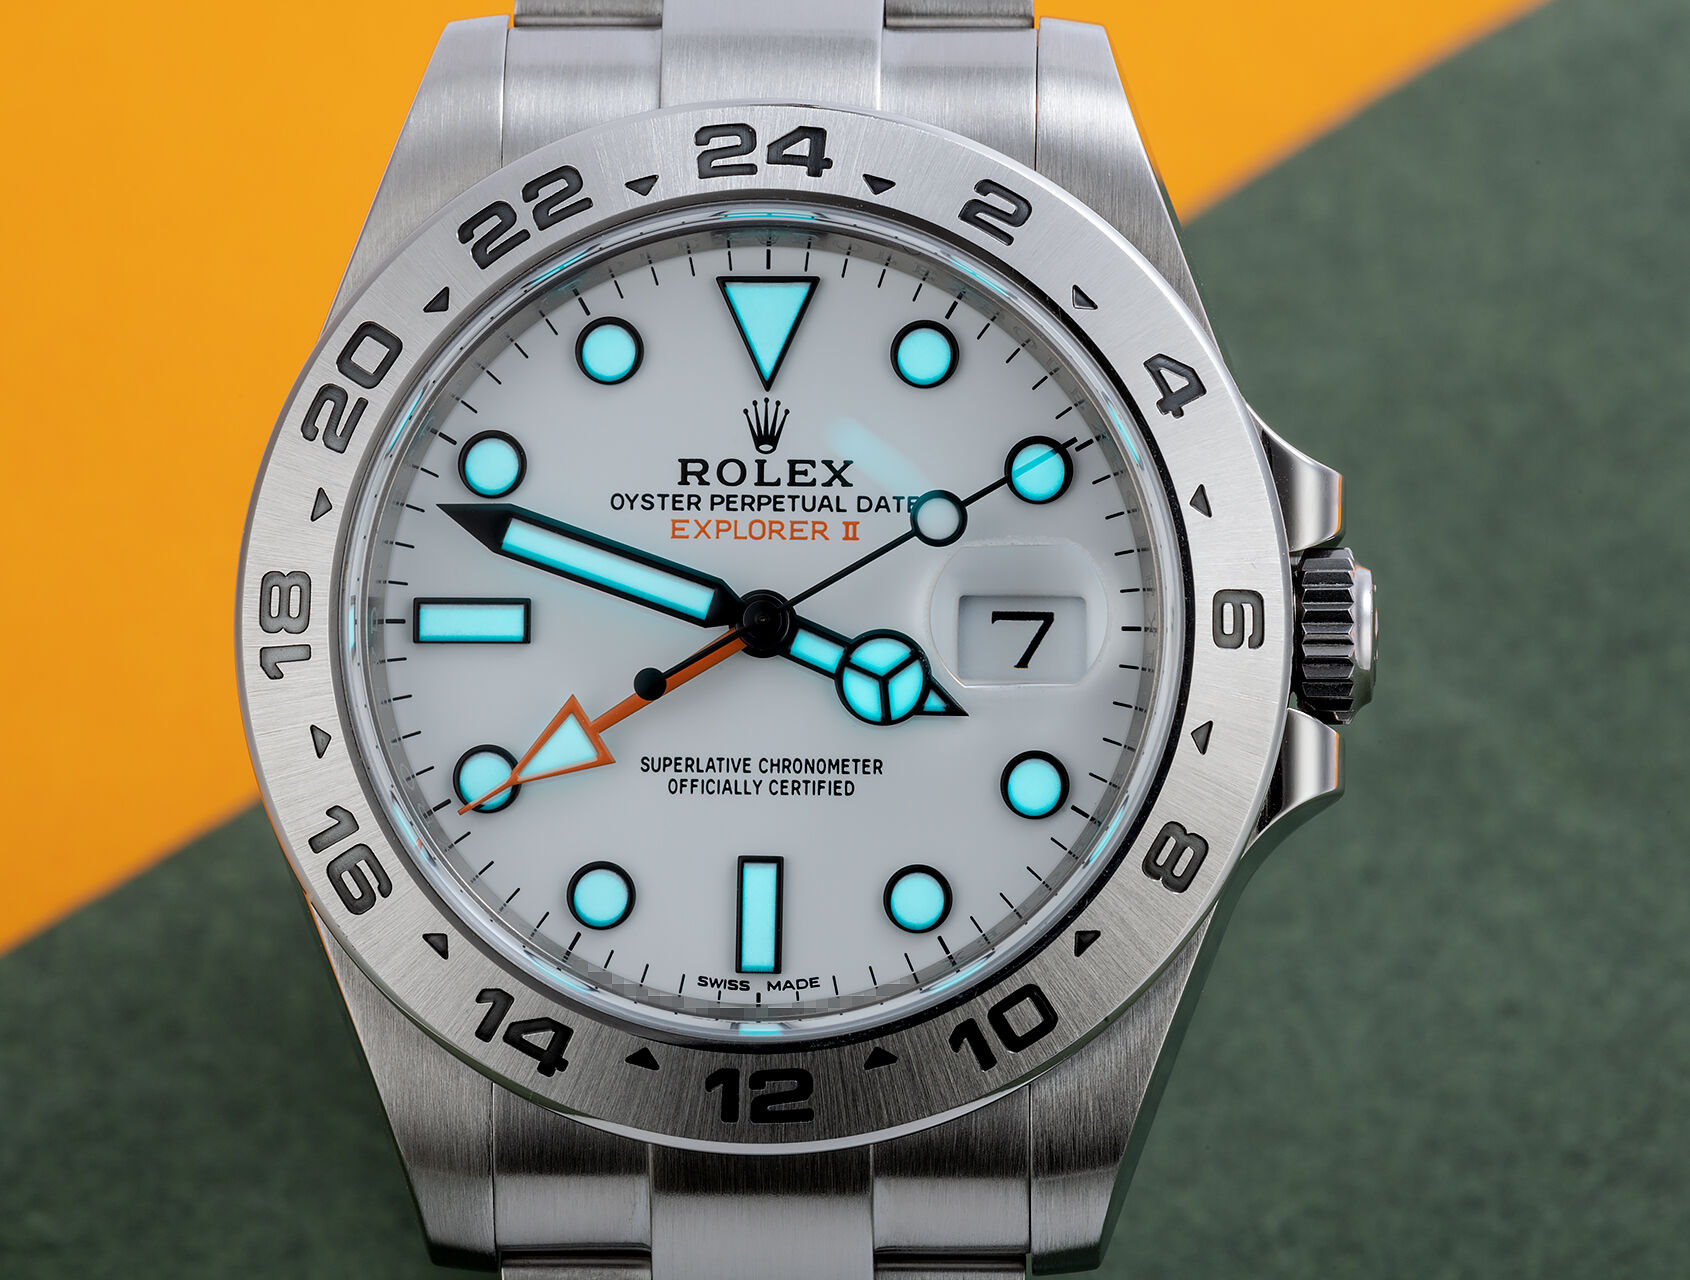 ref 216570 | 216570 - Polar Dial | Rolex Explorer II